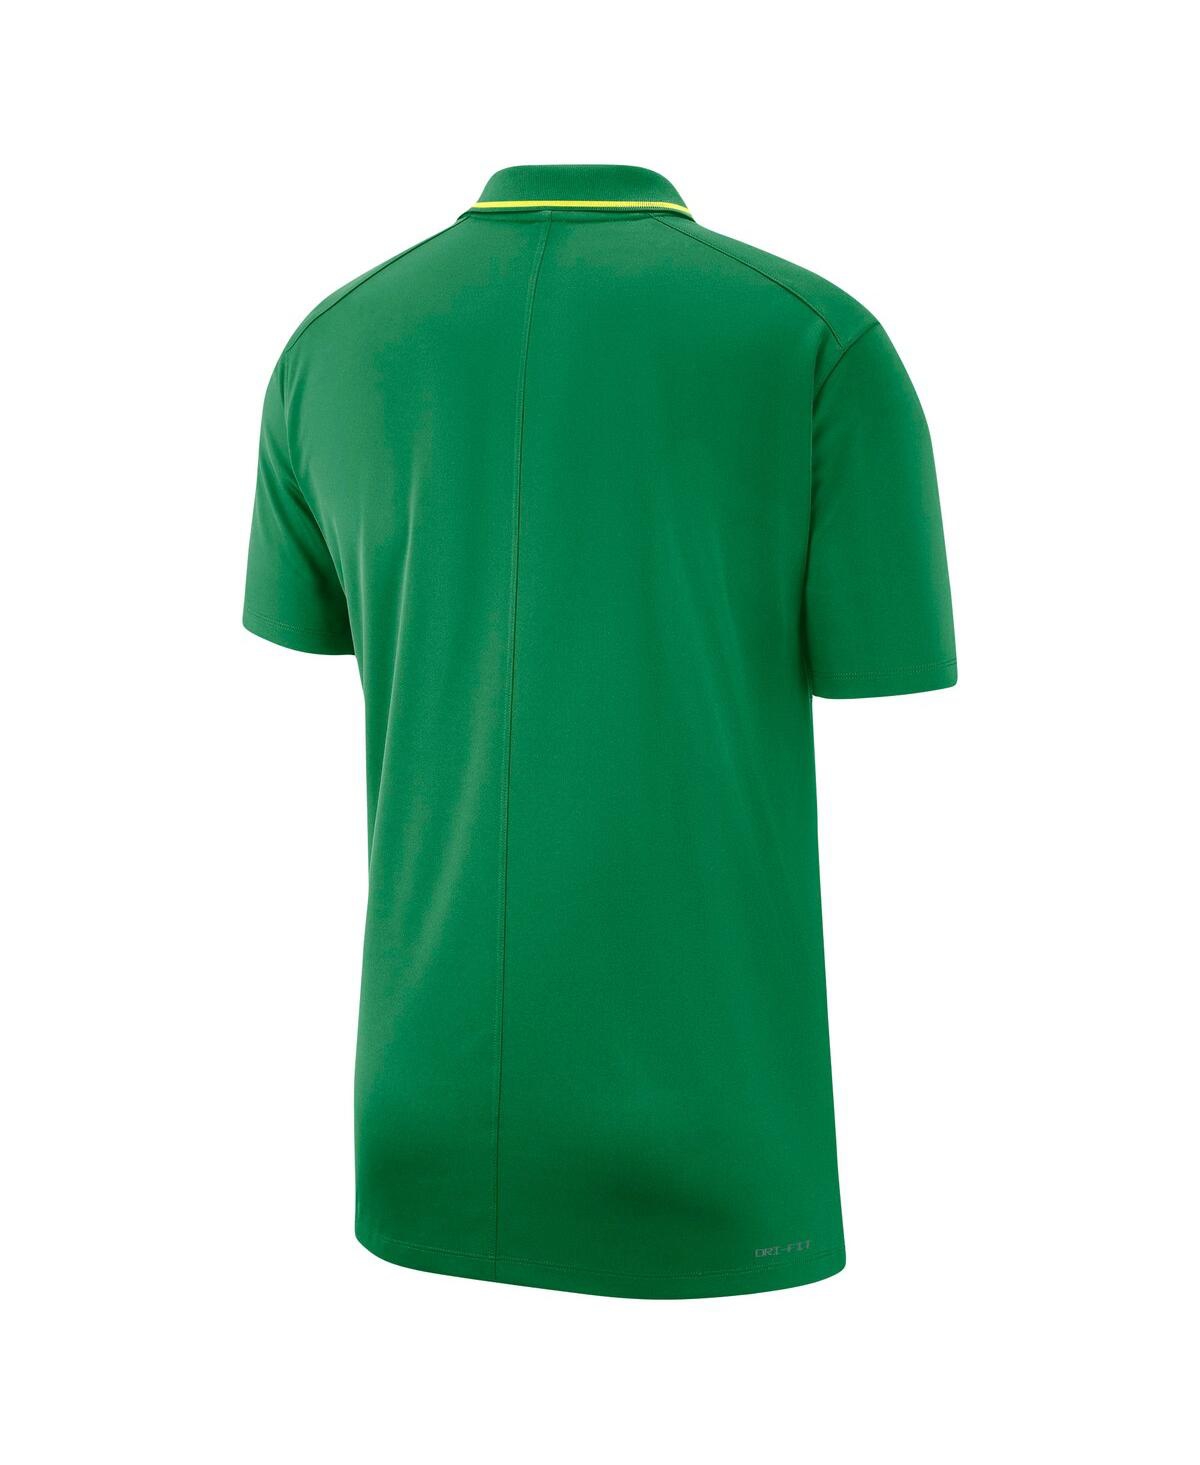 Shop Nike Men's  Green Oregon Ducks Coaches Performance Polo Shirt